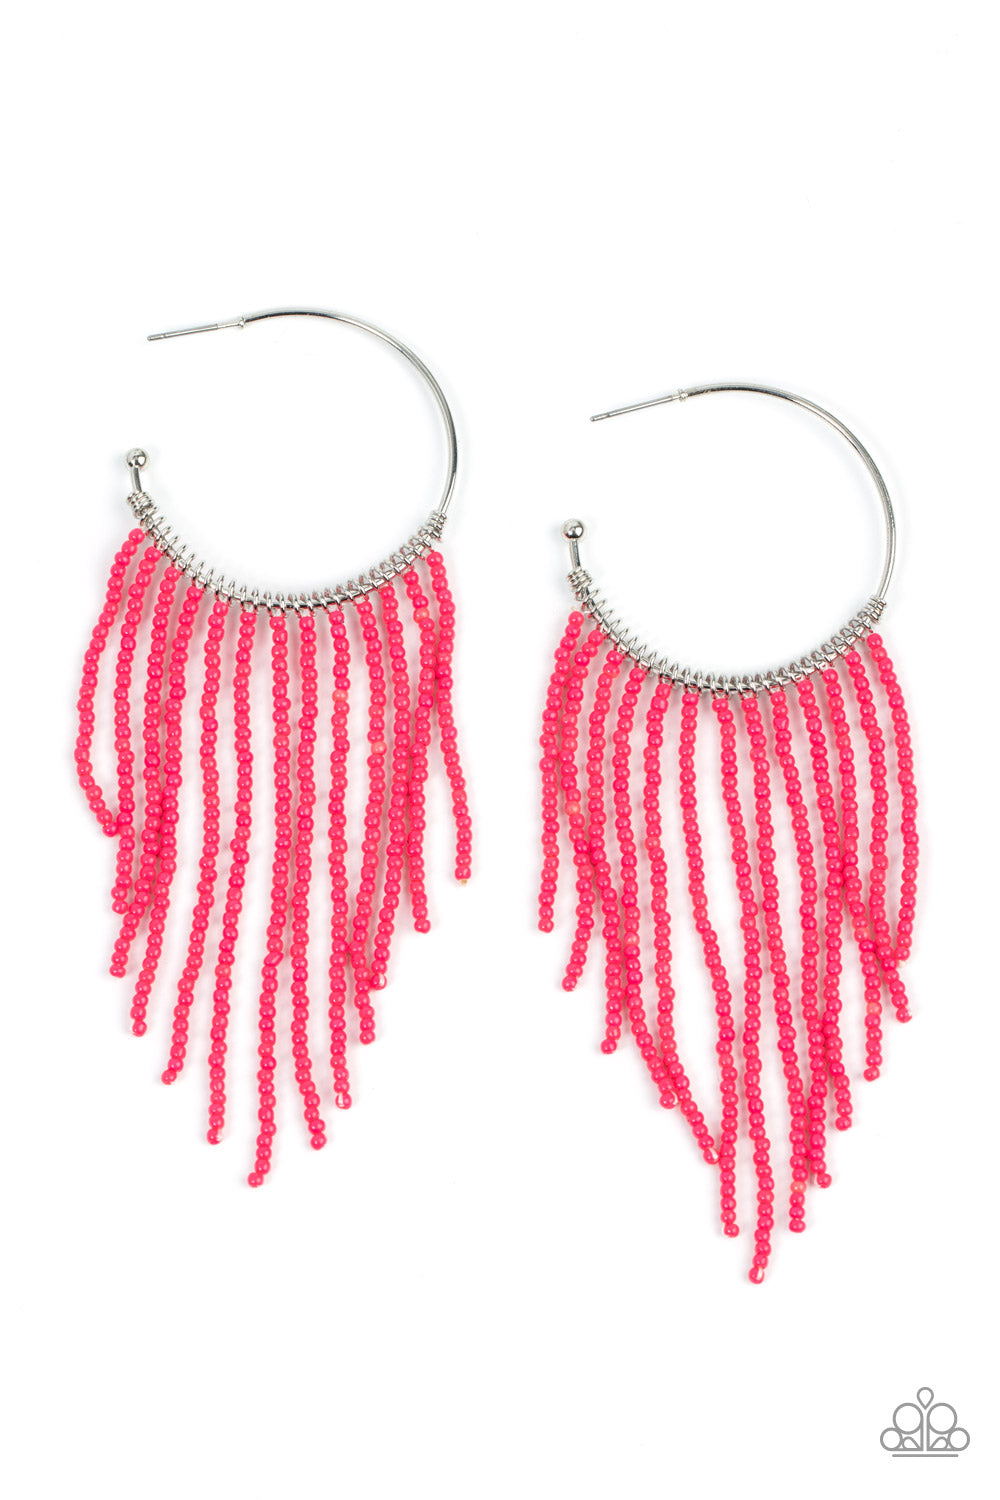 Pichi Pink Druzy Earrings